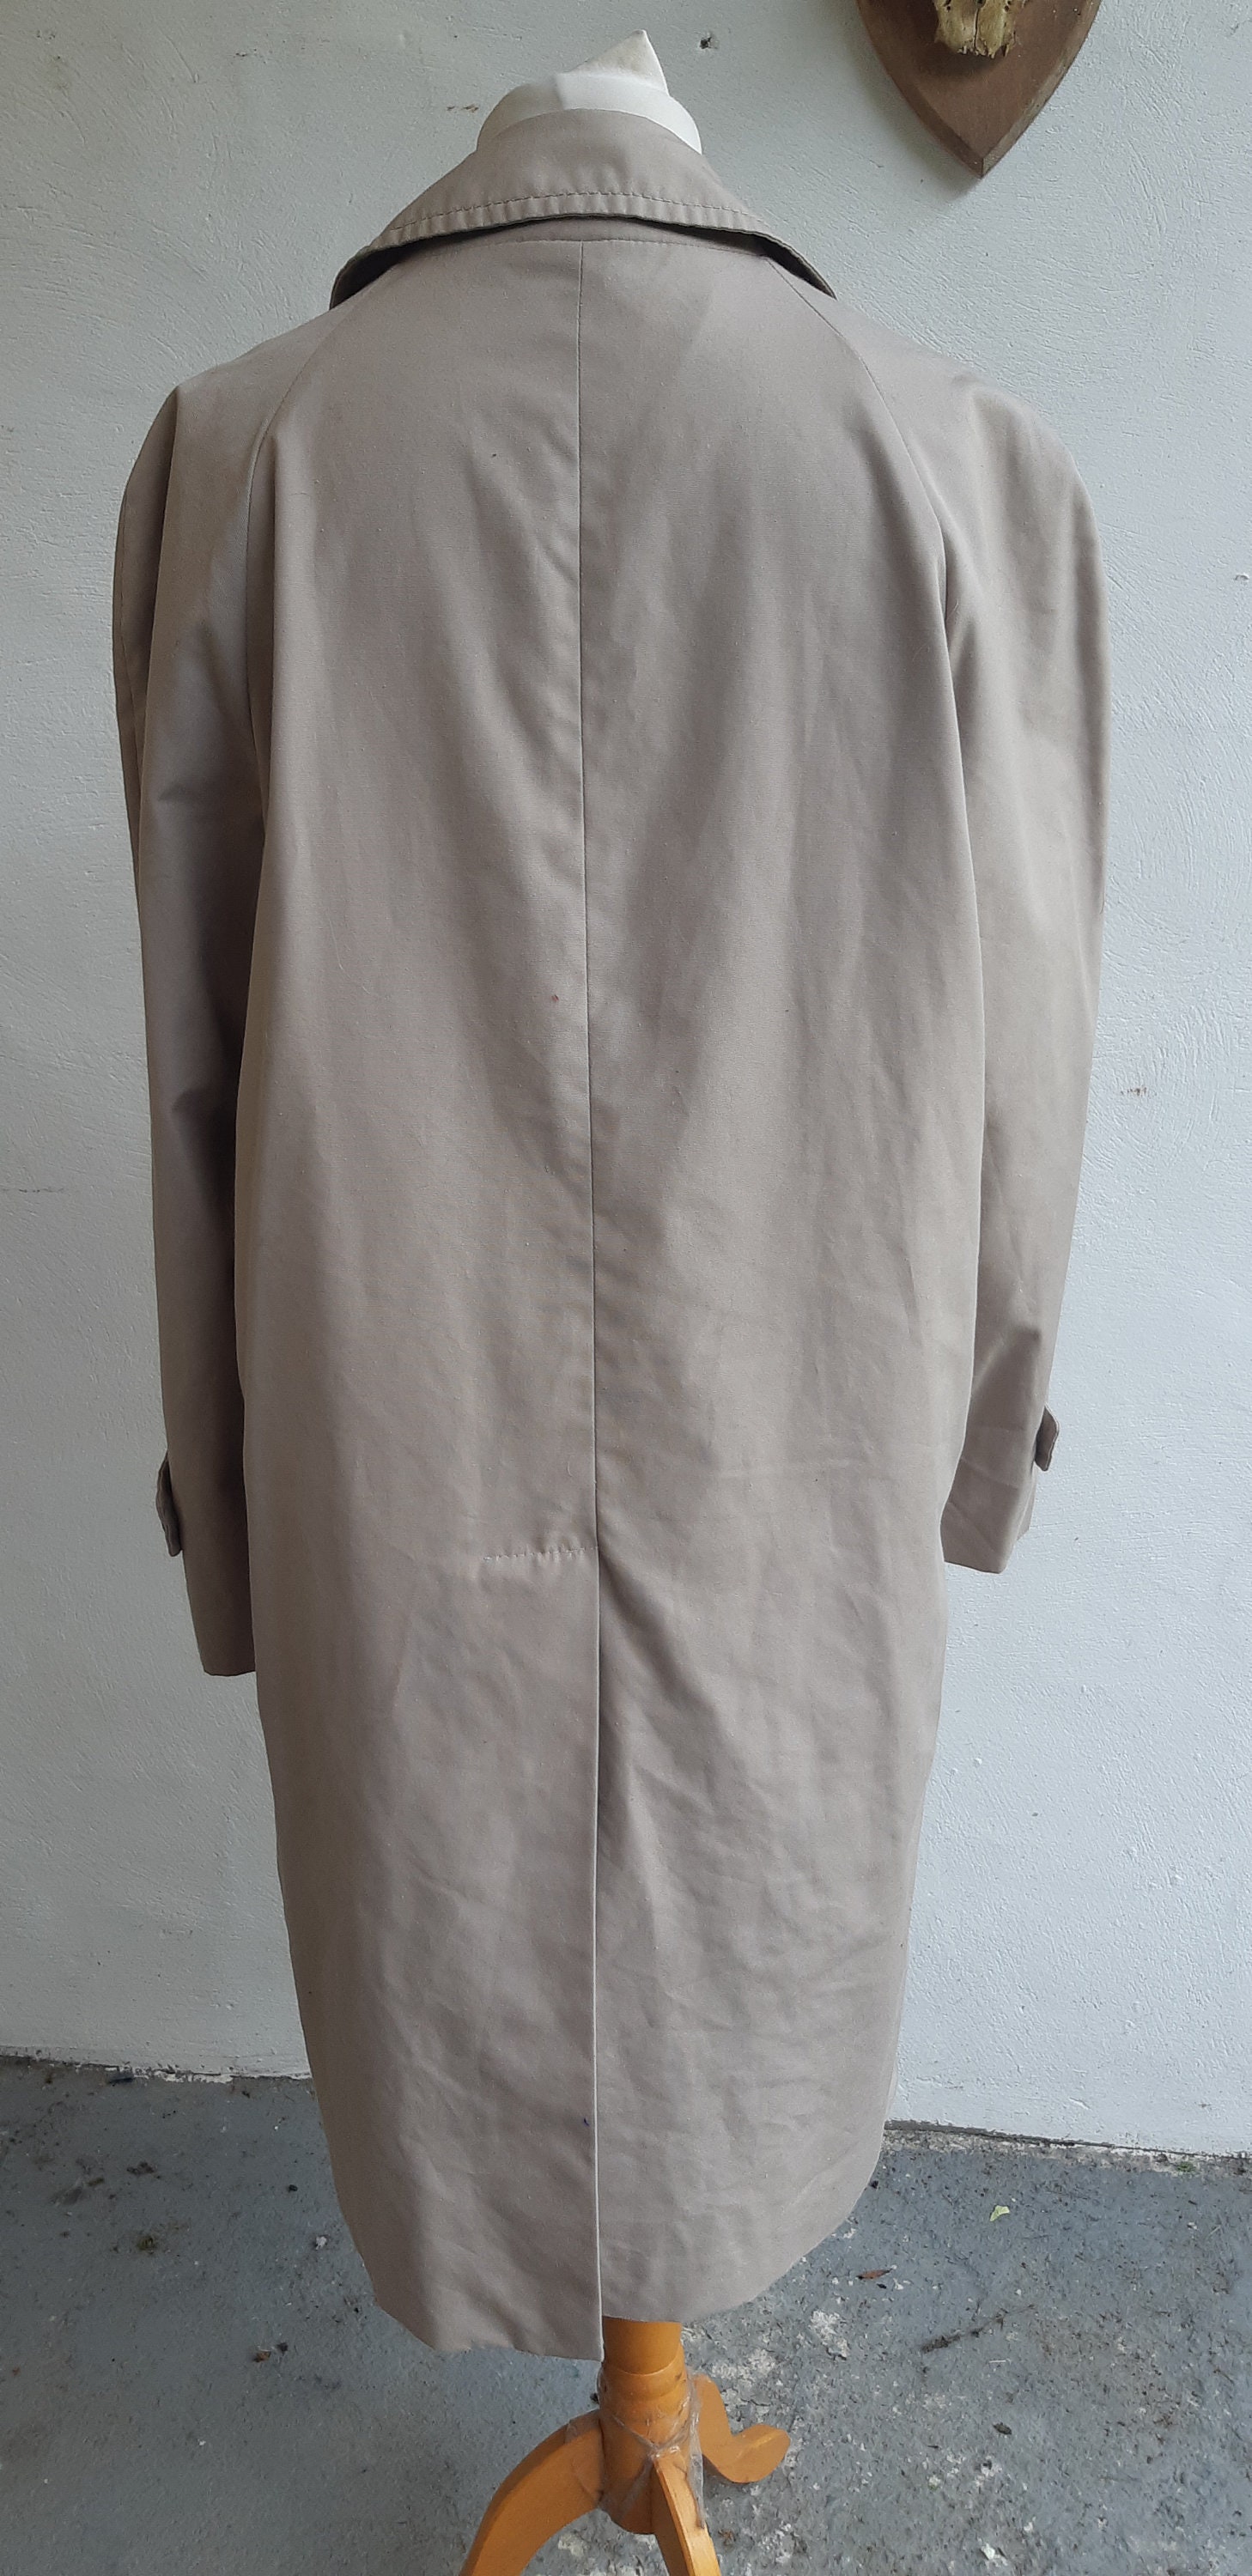 Vintage mens raincoat 80s by St Michael Made in UK beige | Etsy